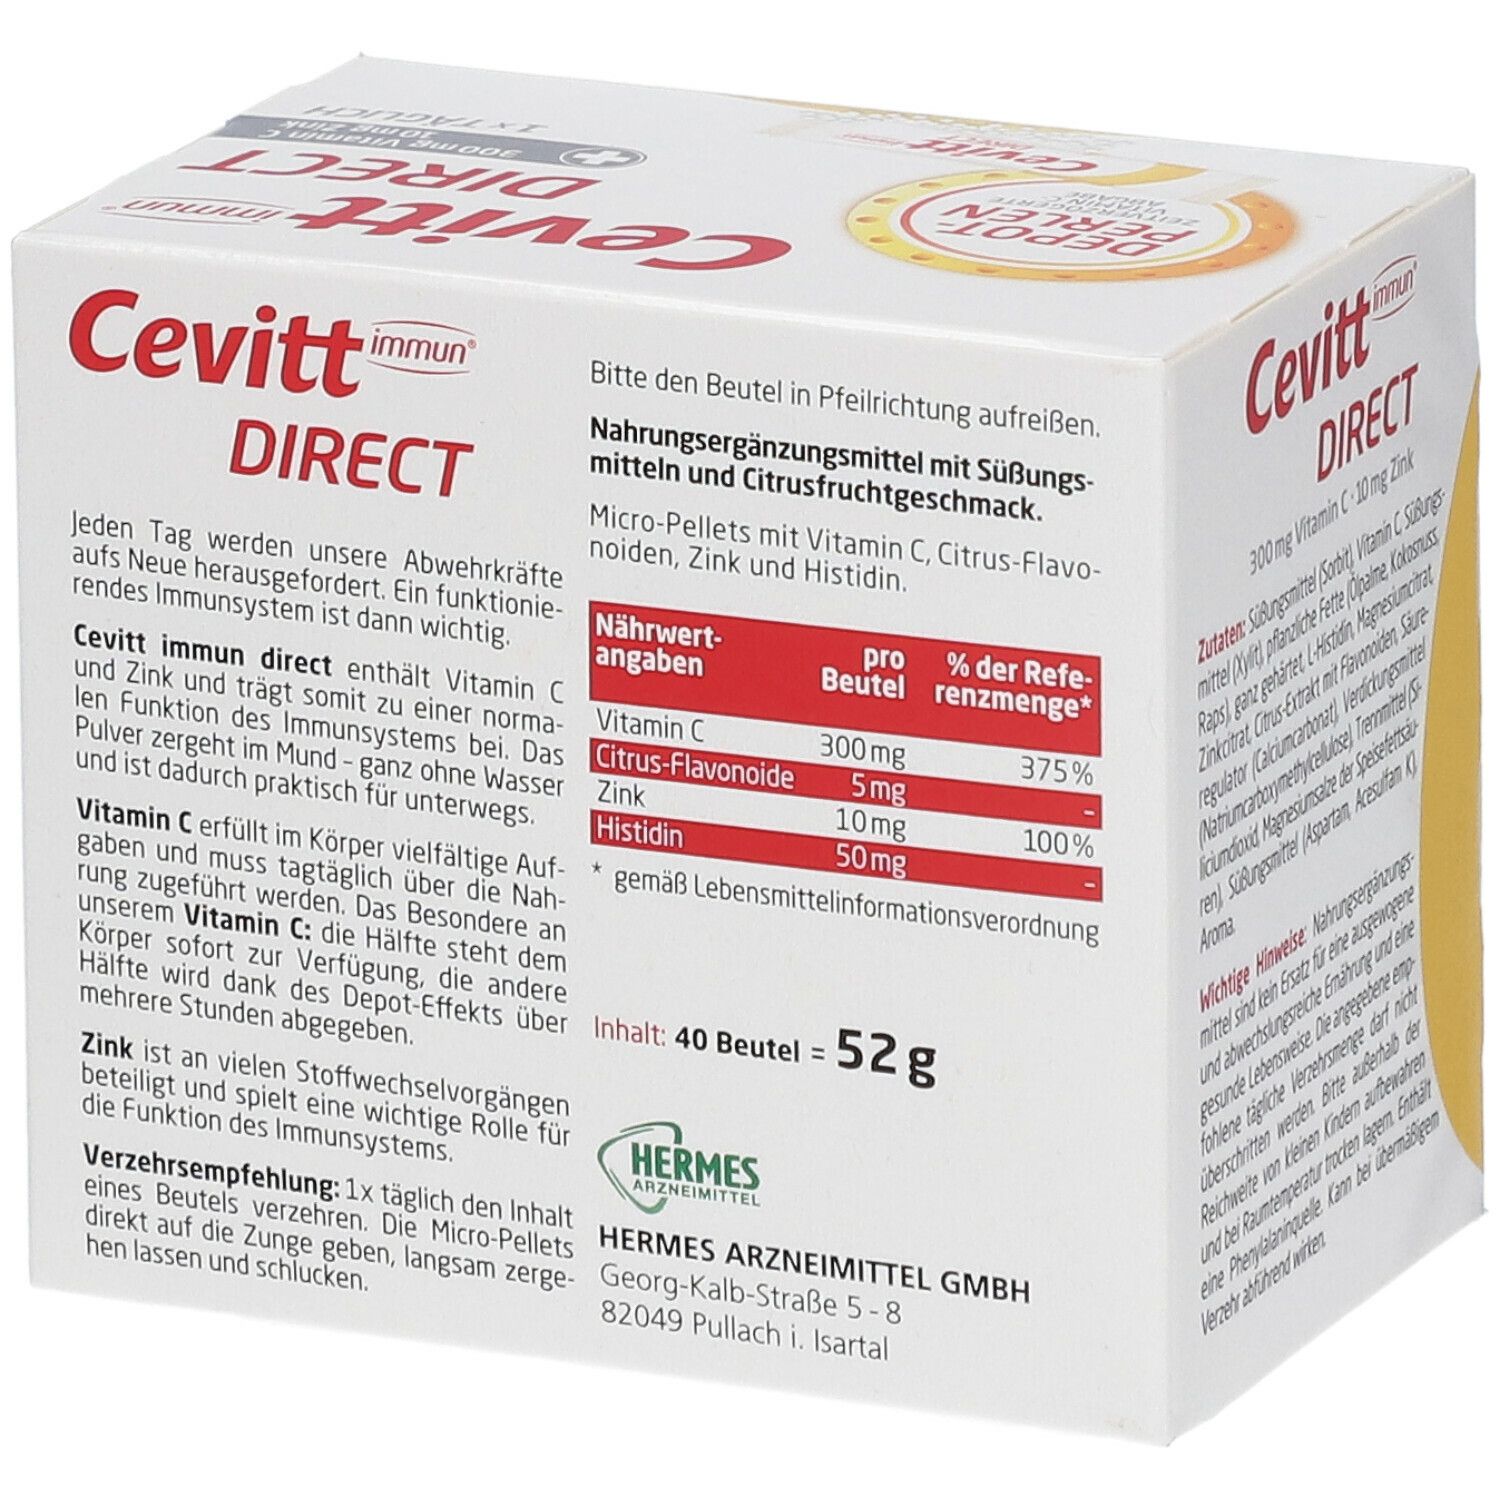 Cevitt immun® Direct Pellets